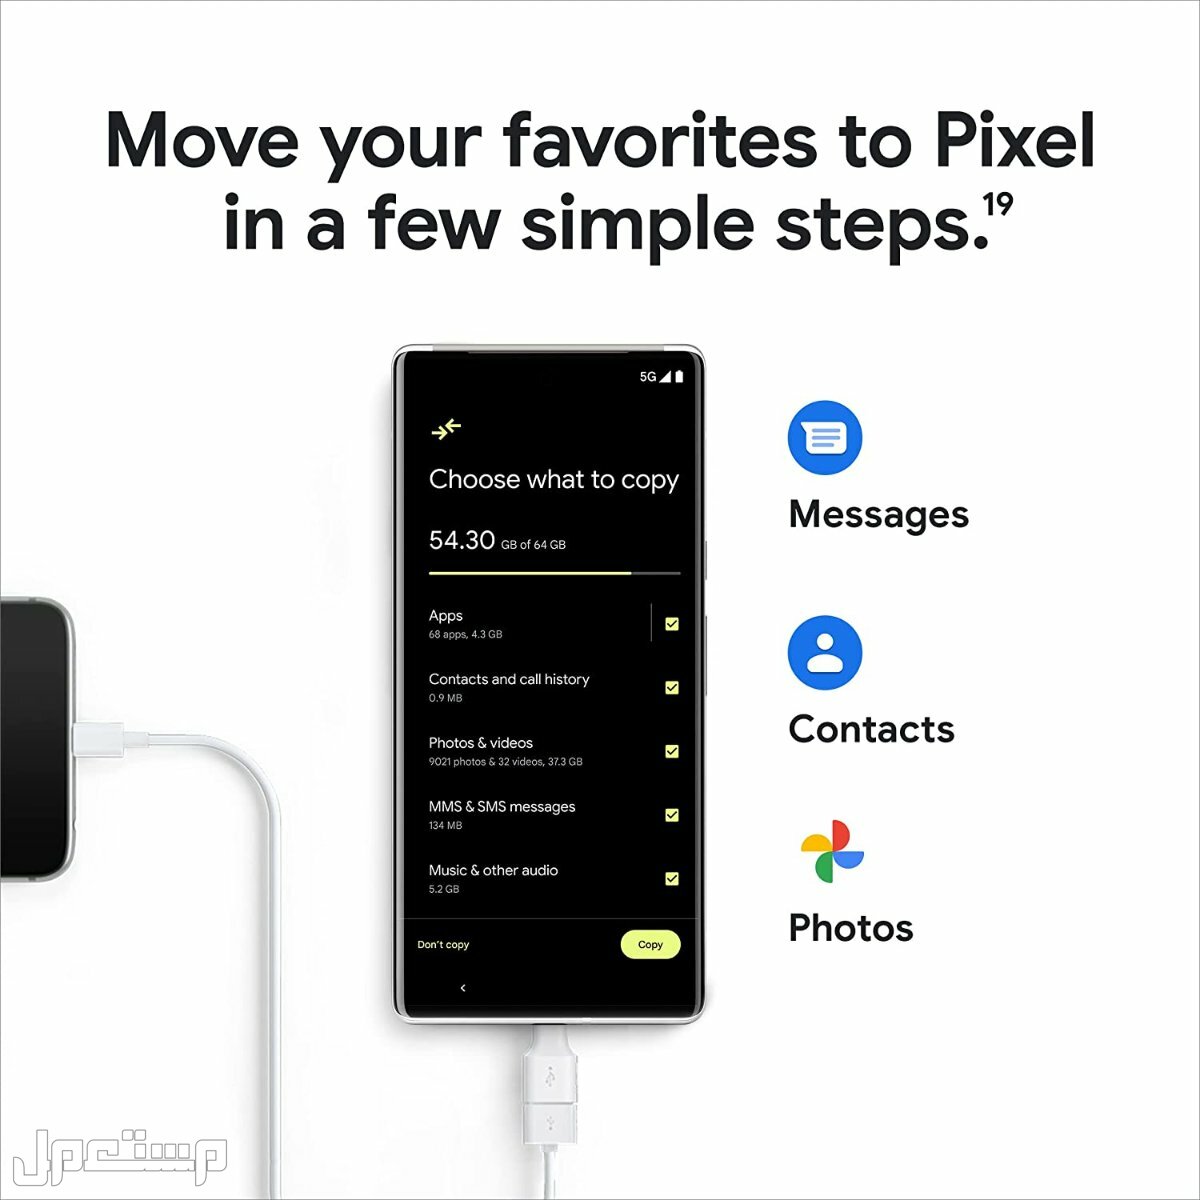 هواتف جوجل: كل ما تحتاج لمعرفته حول هواتف Pixel في عمان جوال قوقل